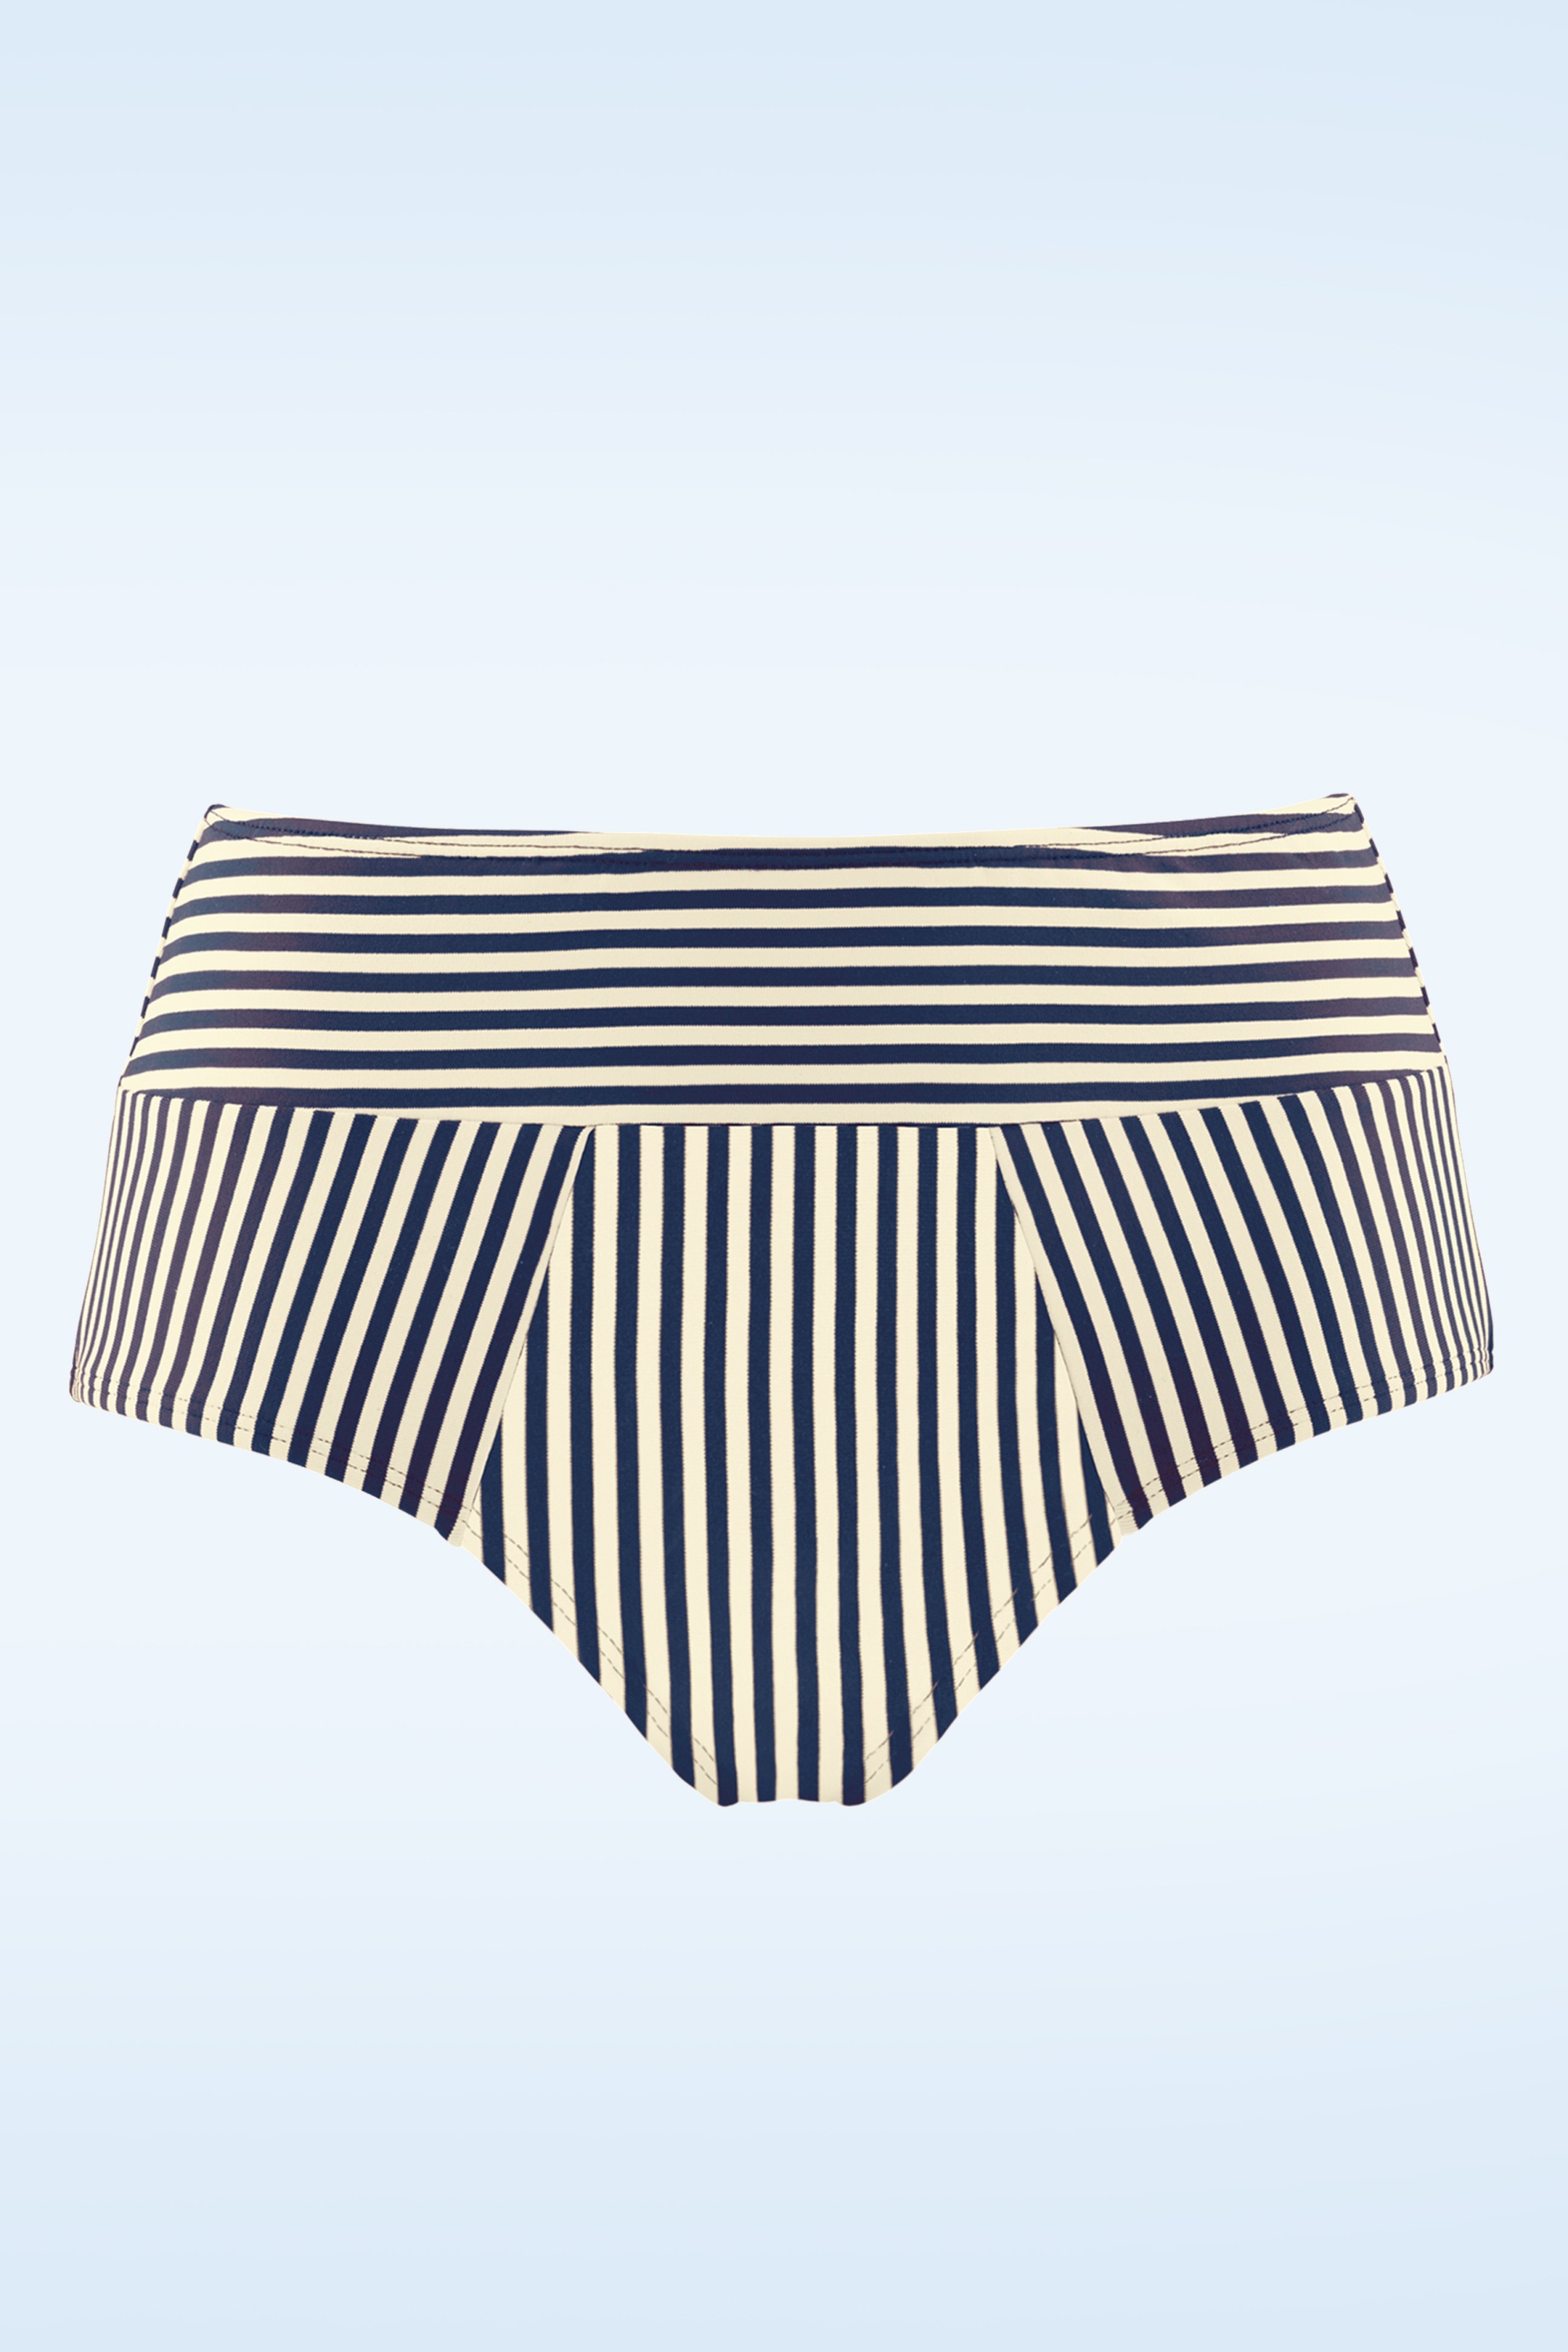 Marlies Dekkers - Holi Vintage bikinibroekje met hoge taille in blauw en ecru 4